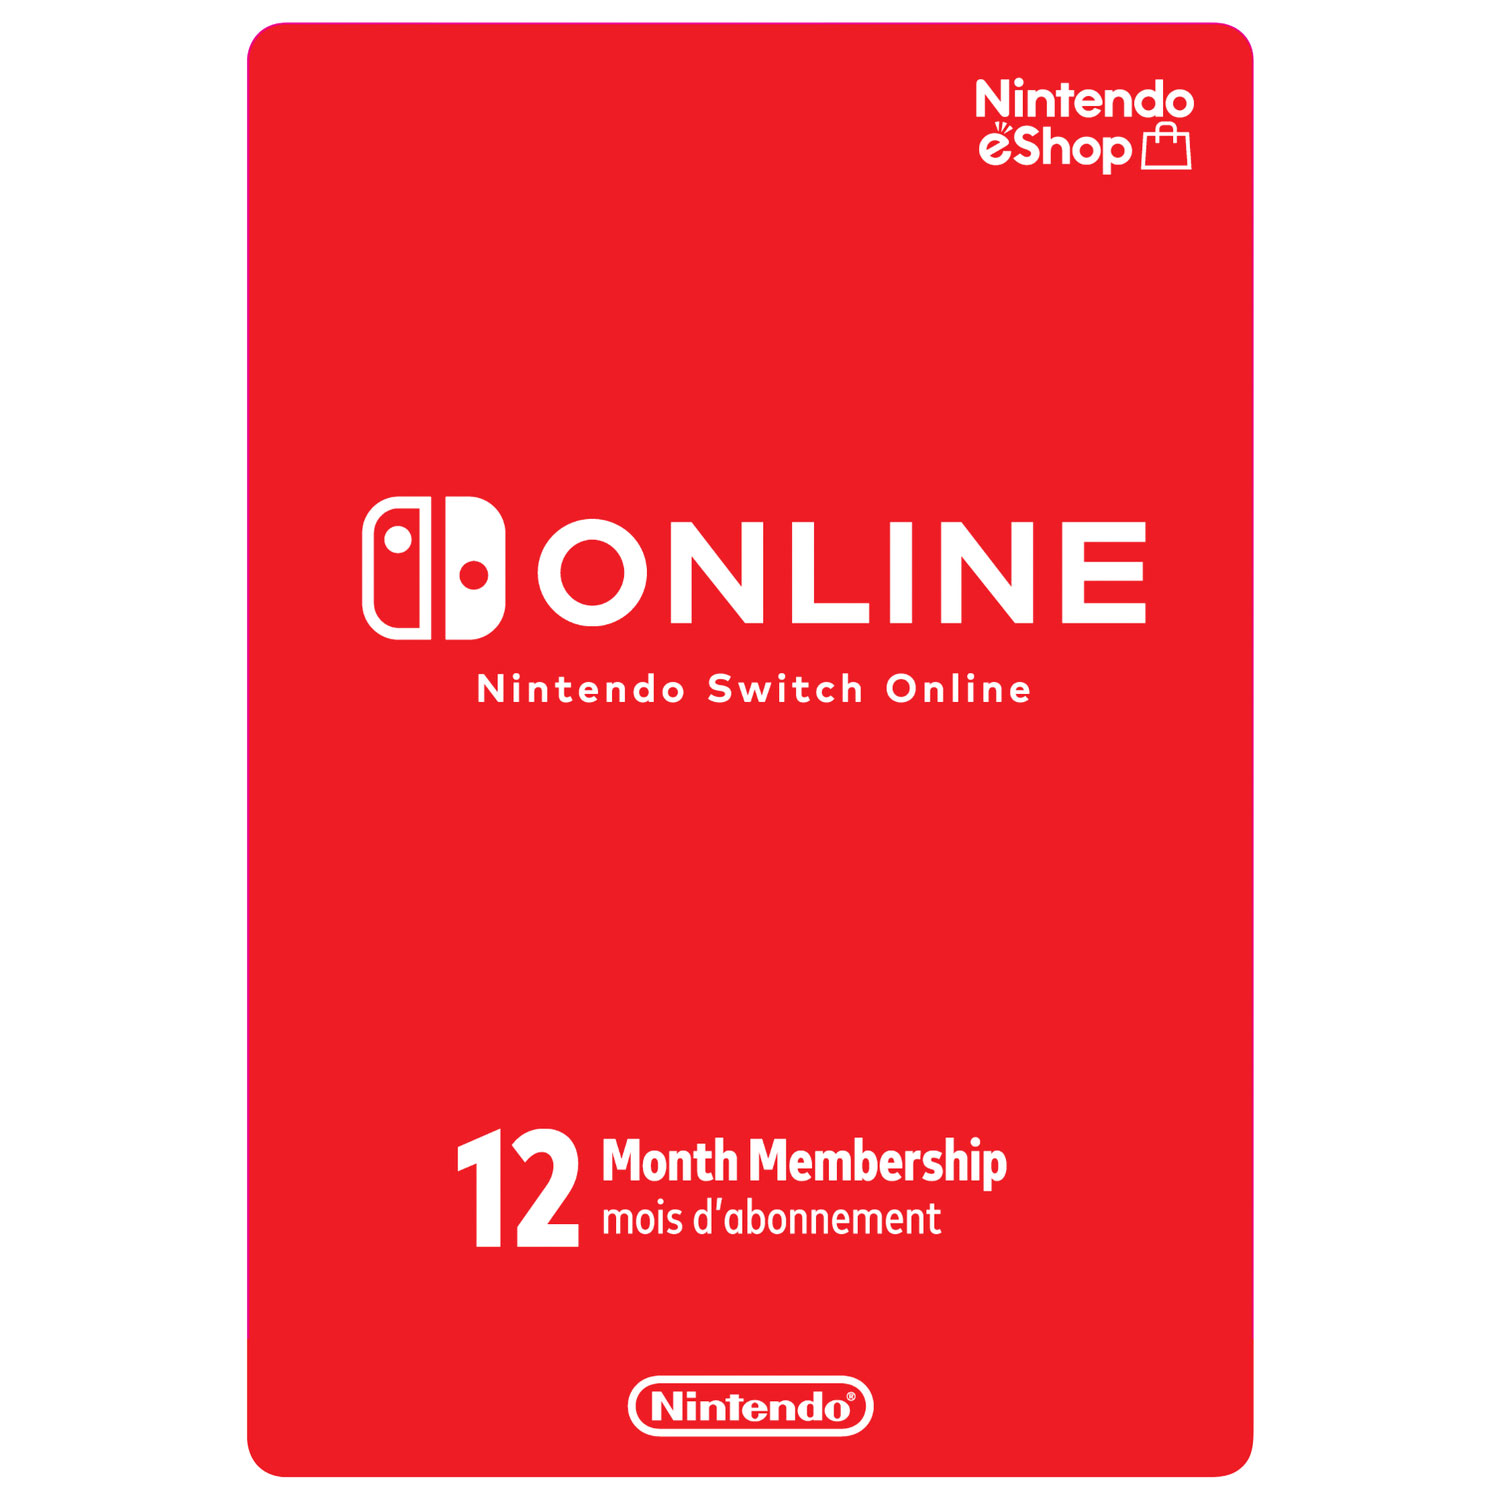 Nintendo Switch Online 12-Month Membership - Digital Download